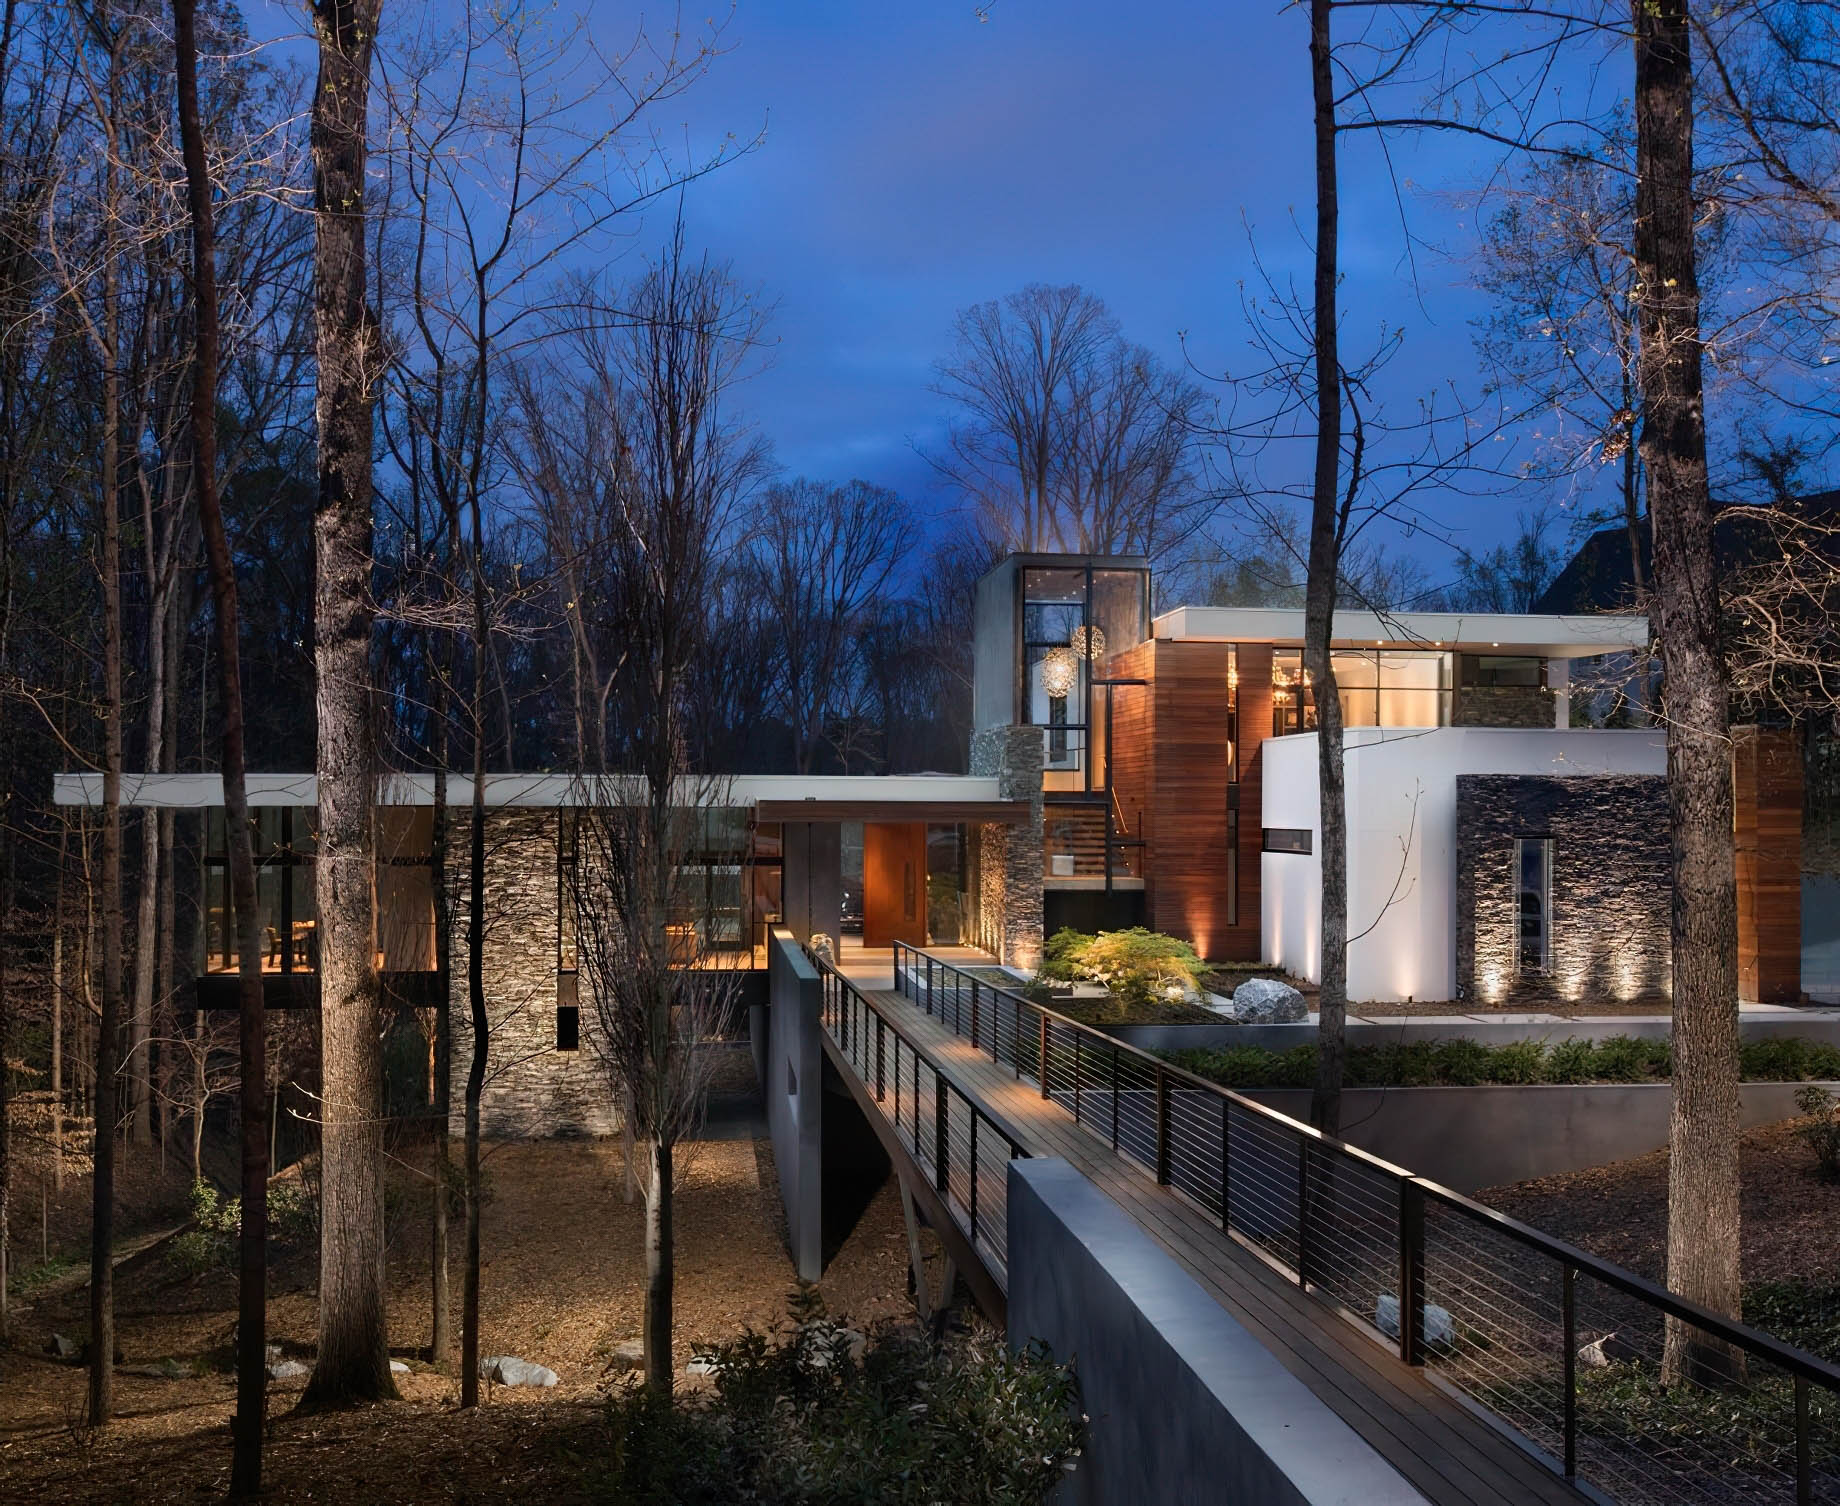 Highcourt Bridge House Residence - Atlanta, GA, USA - Modern Architectural Home